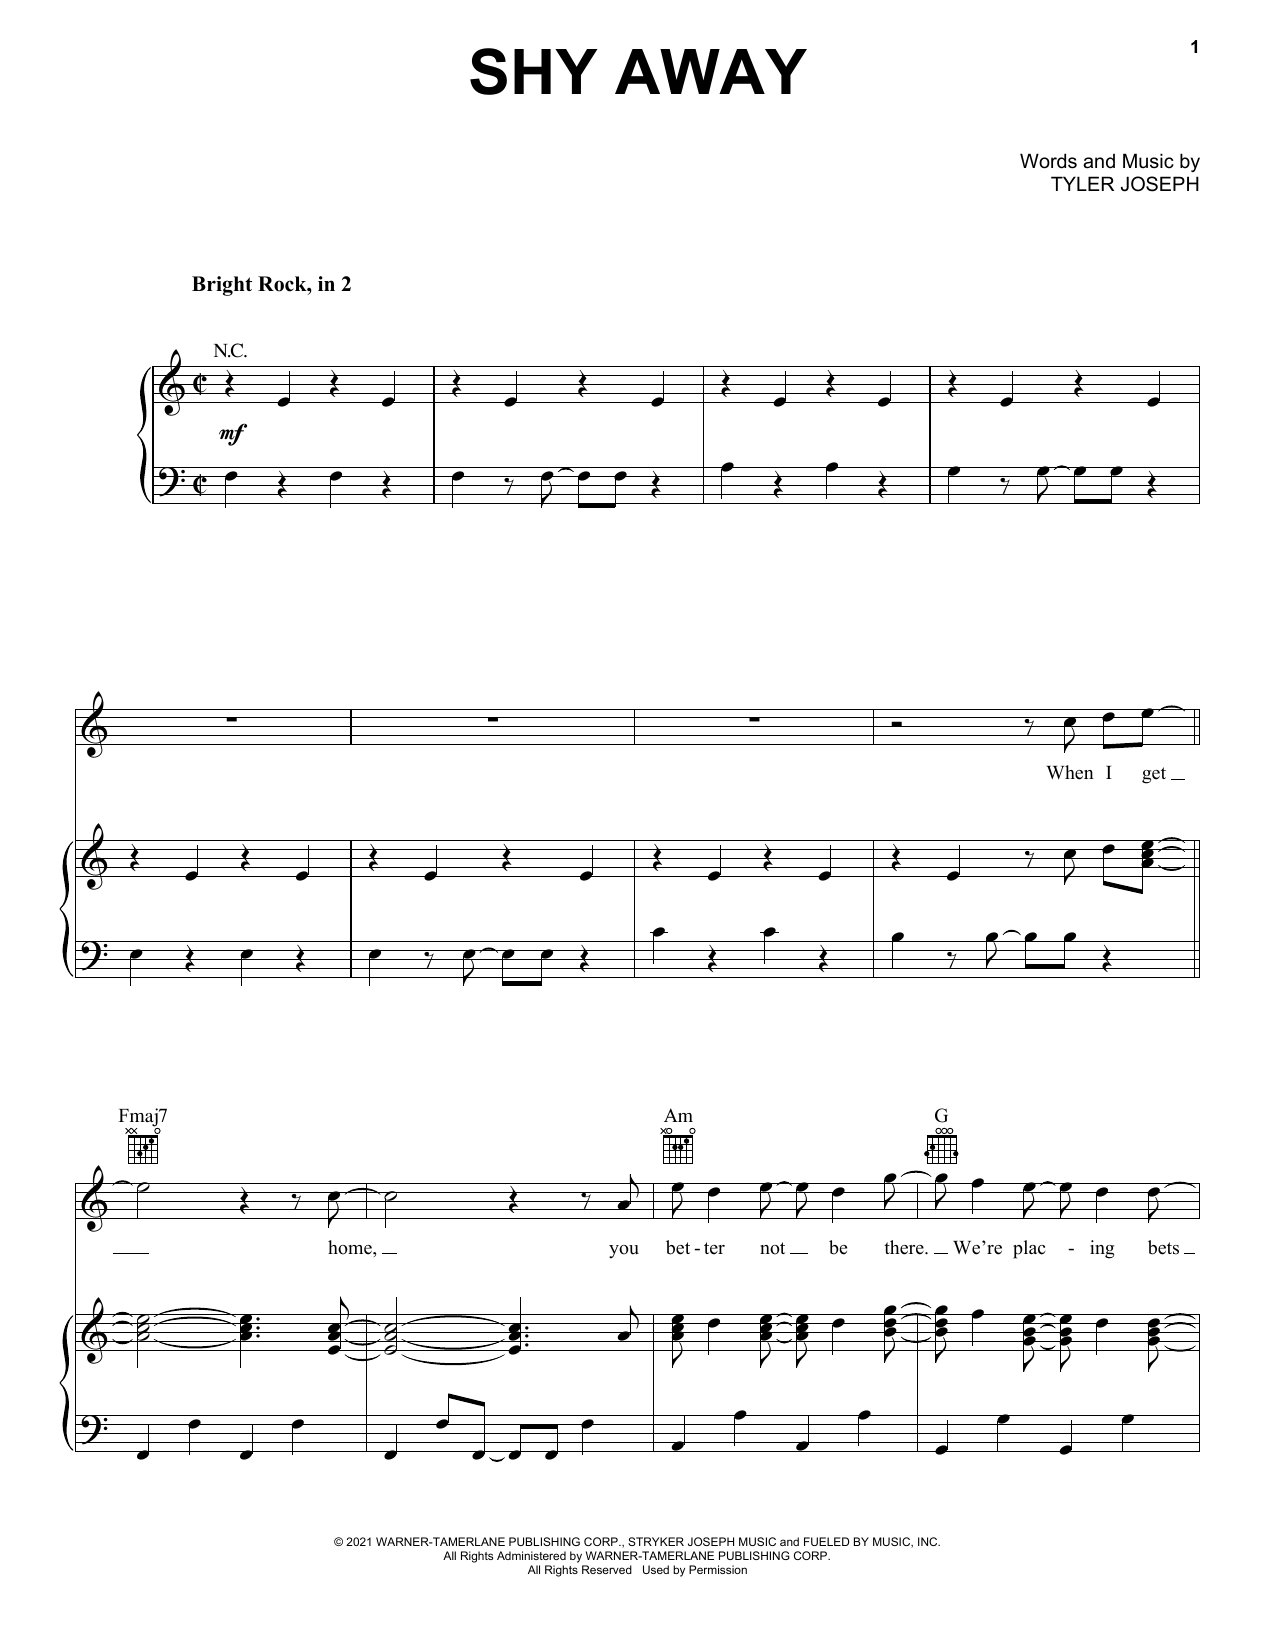 Twenty One Pilots Shy Away Sheet Music Notes & Chords for Easy Guitar Tab - Download or Print PDF